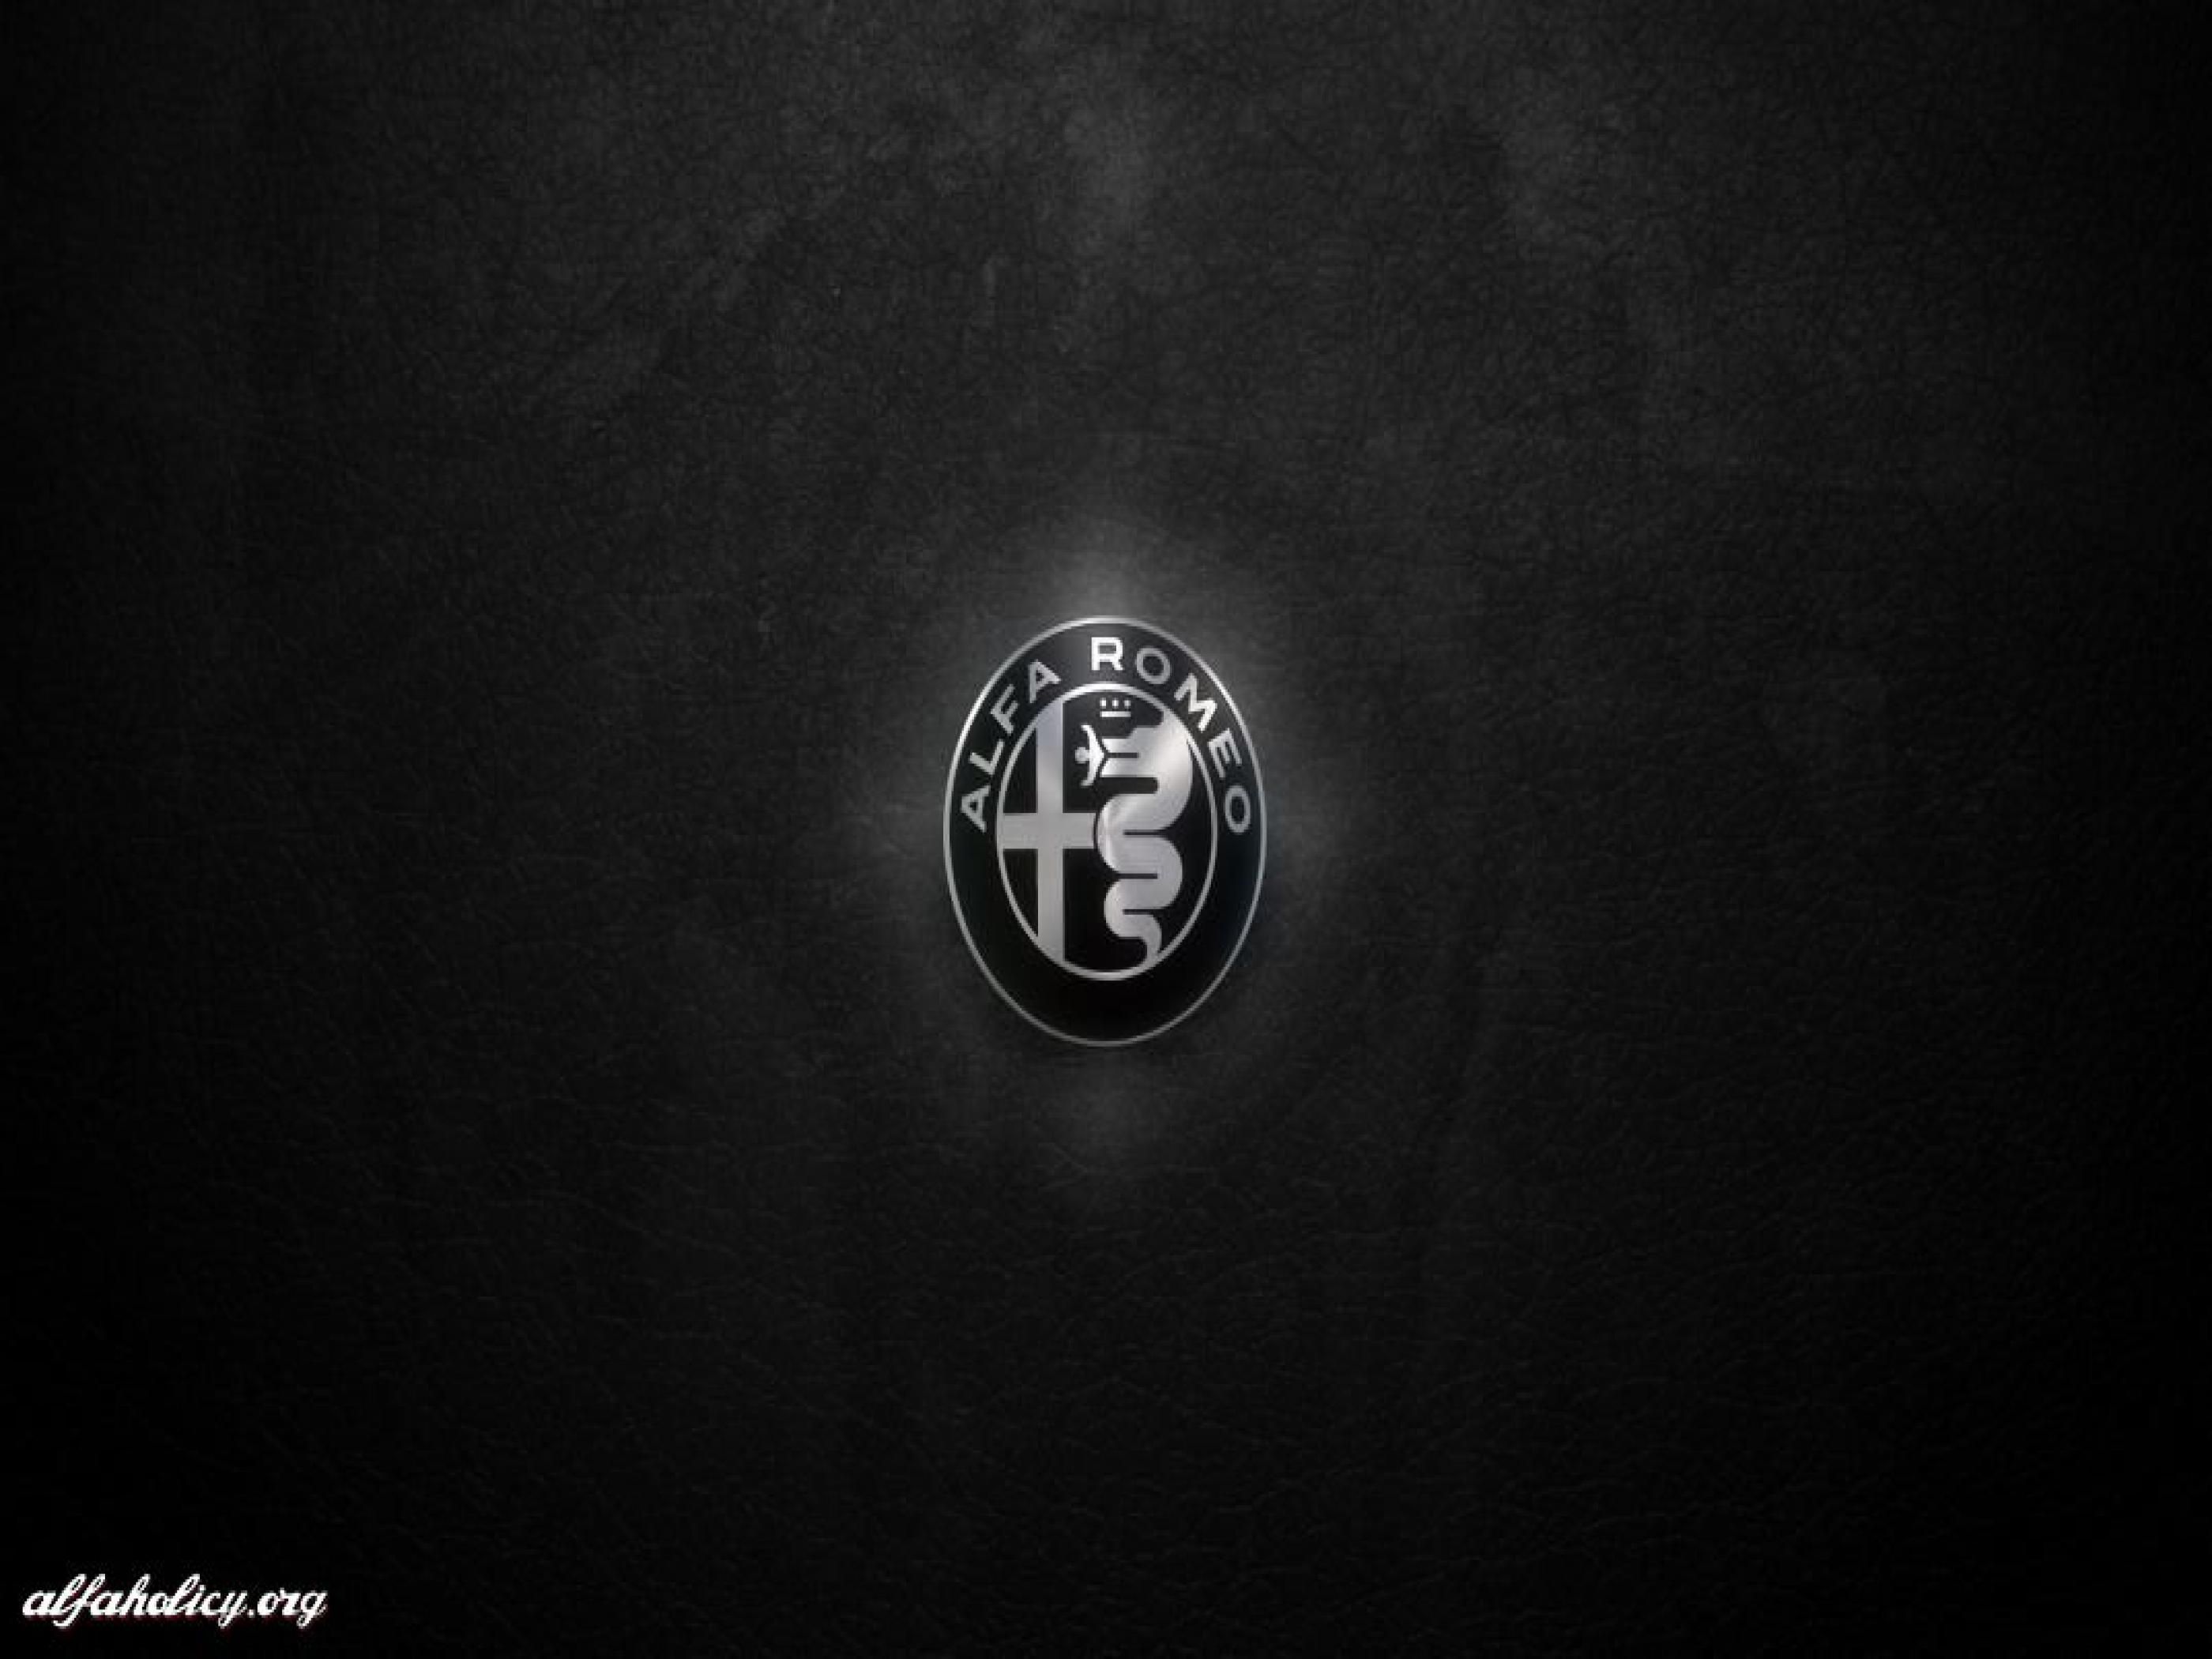 Alfa Romeo Logo Wallpapers